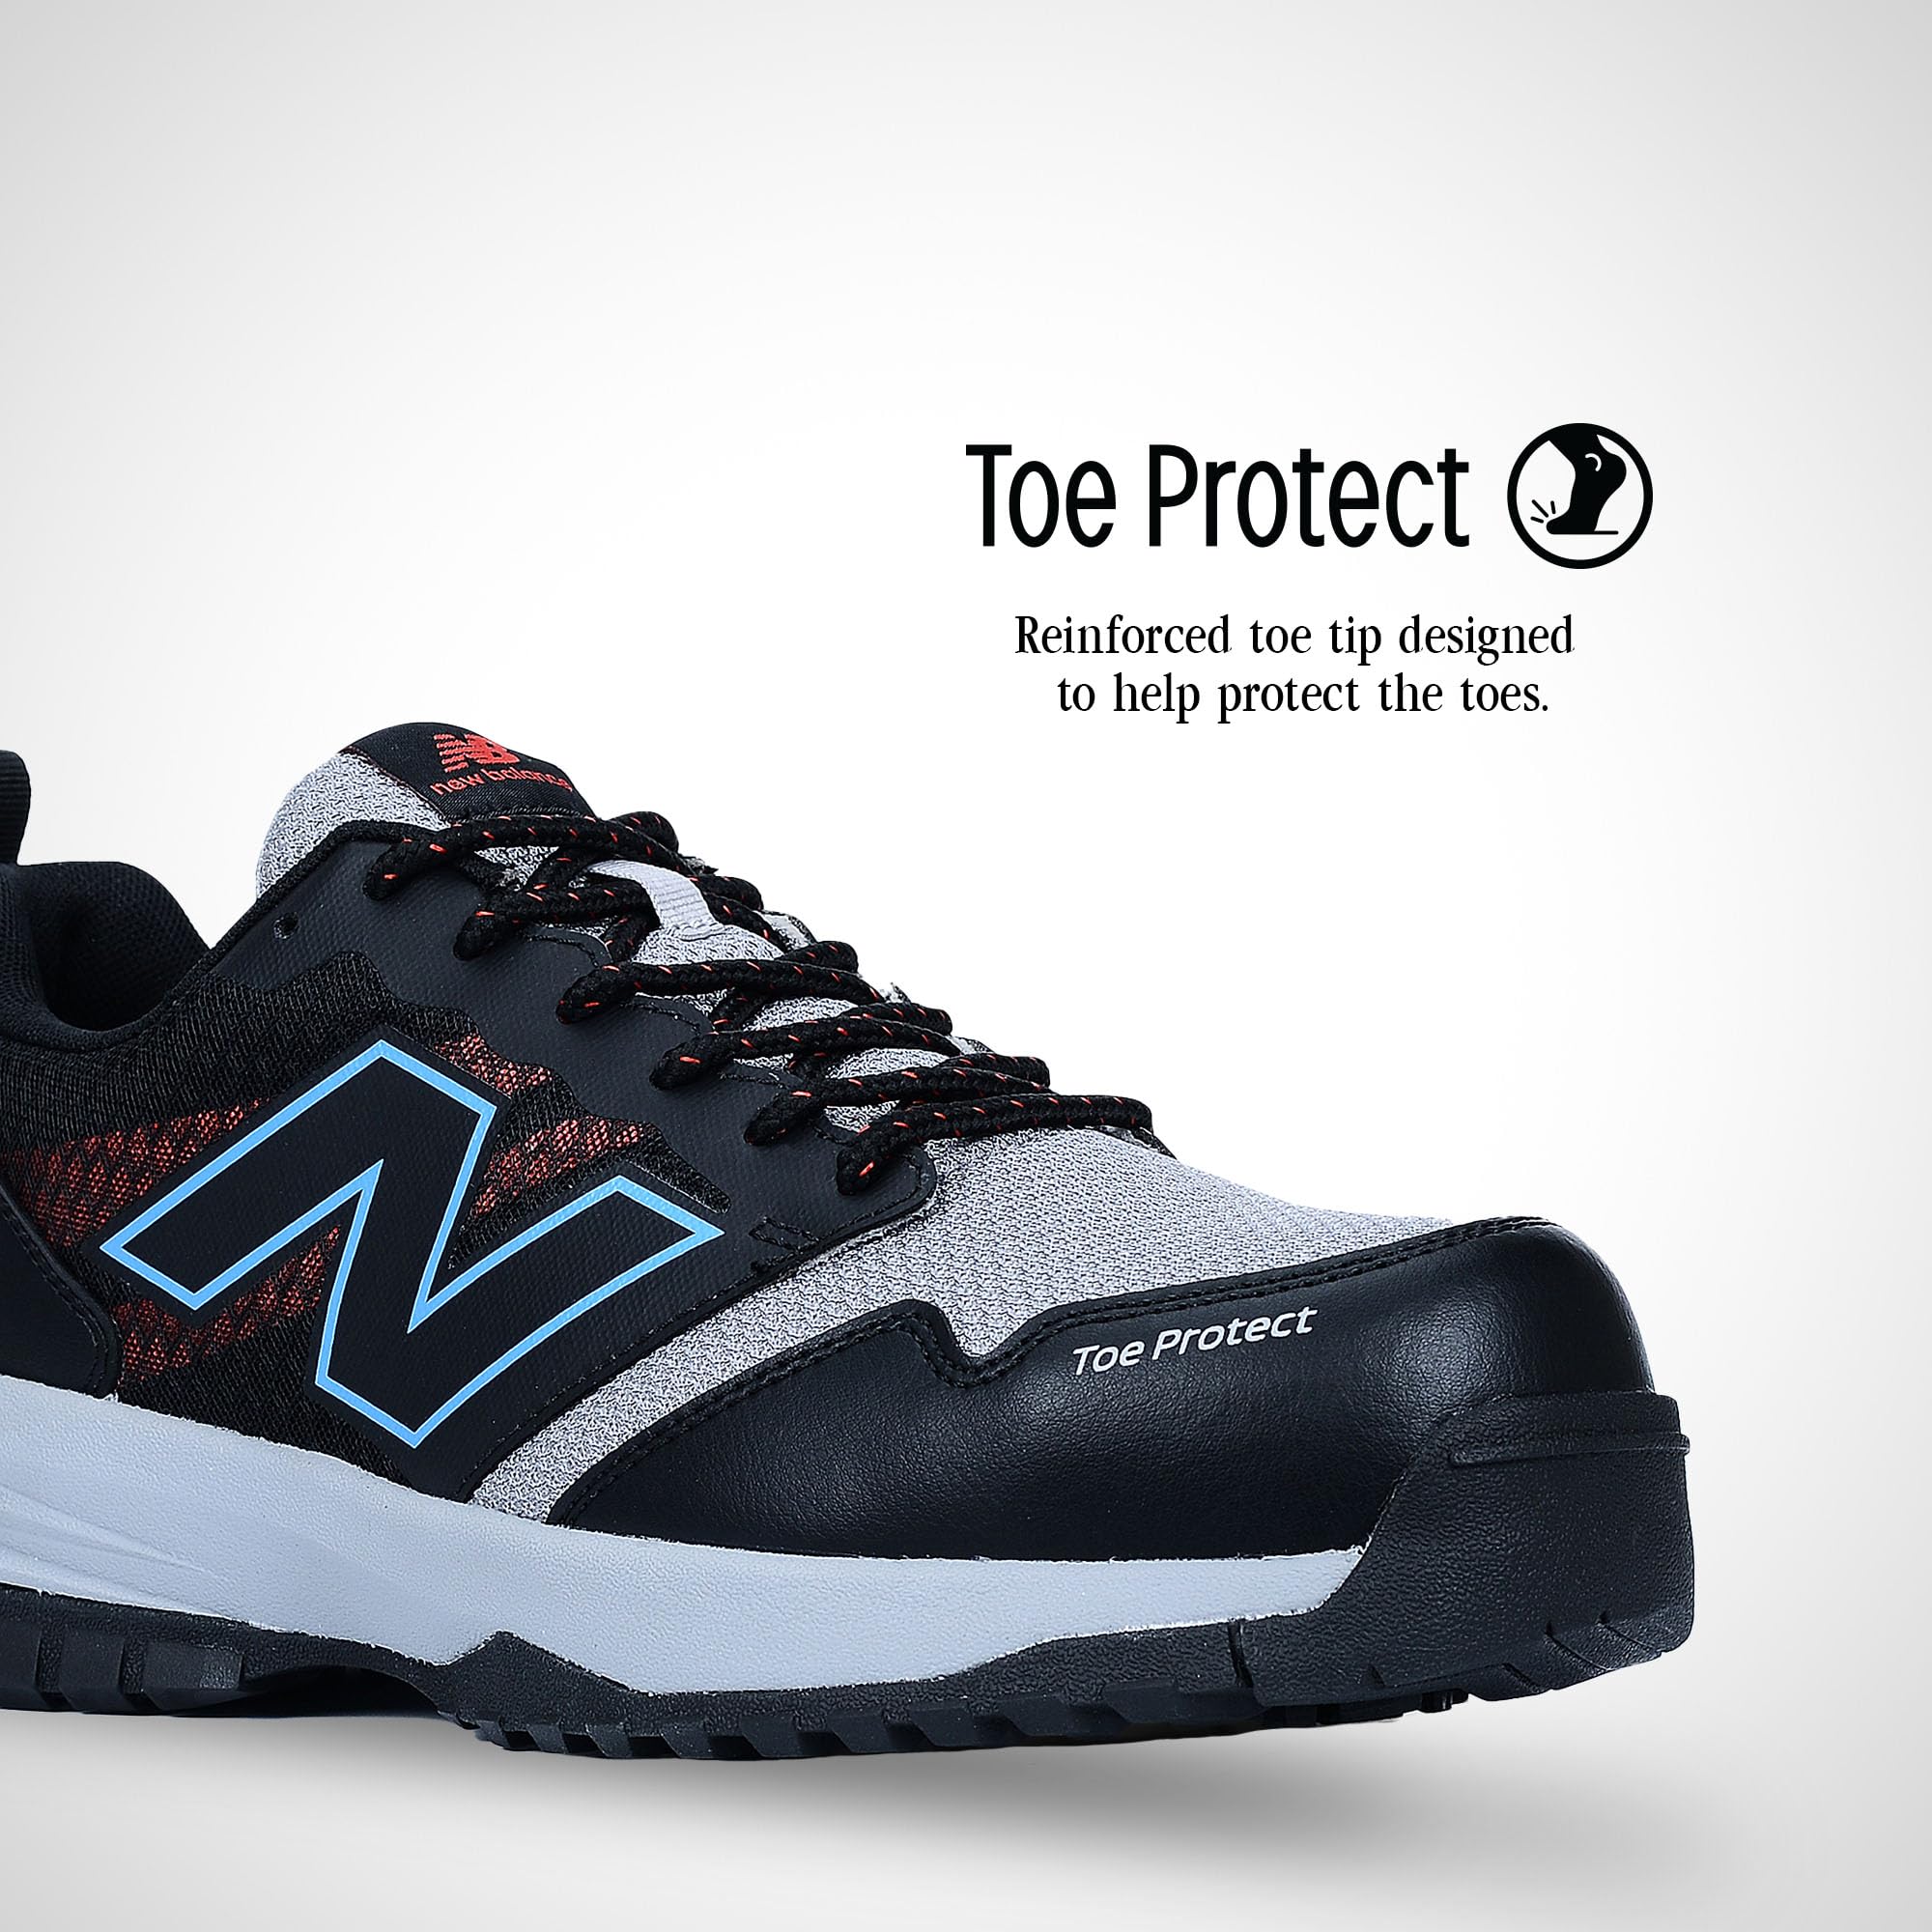 New Balance Men's Composite Toe Quikshift Industrial Shoe, Black/Blue/Red, 17 X-Wide